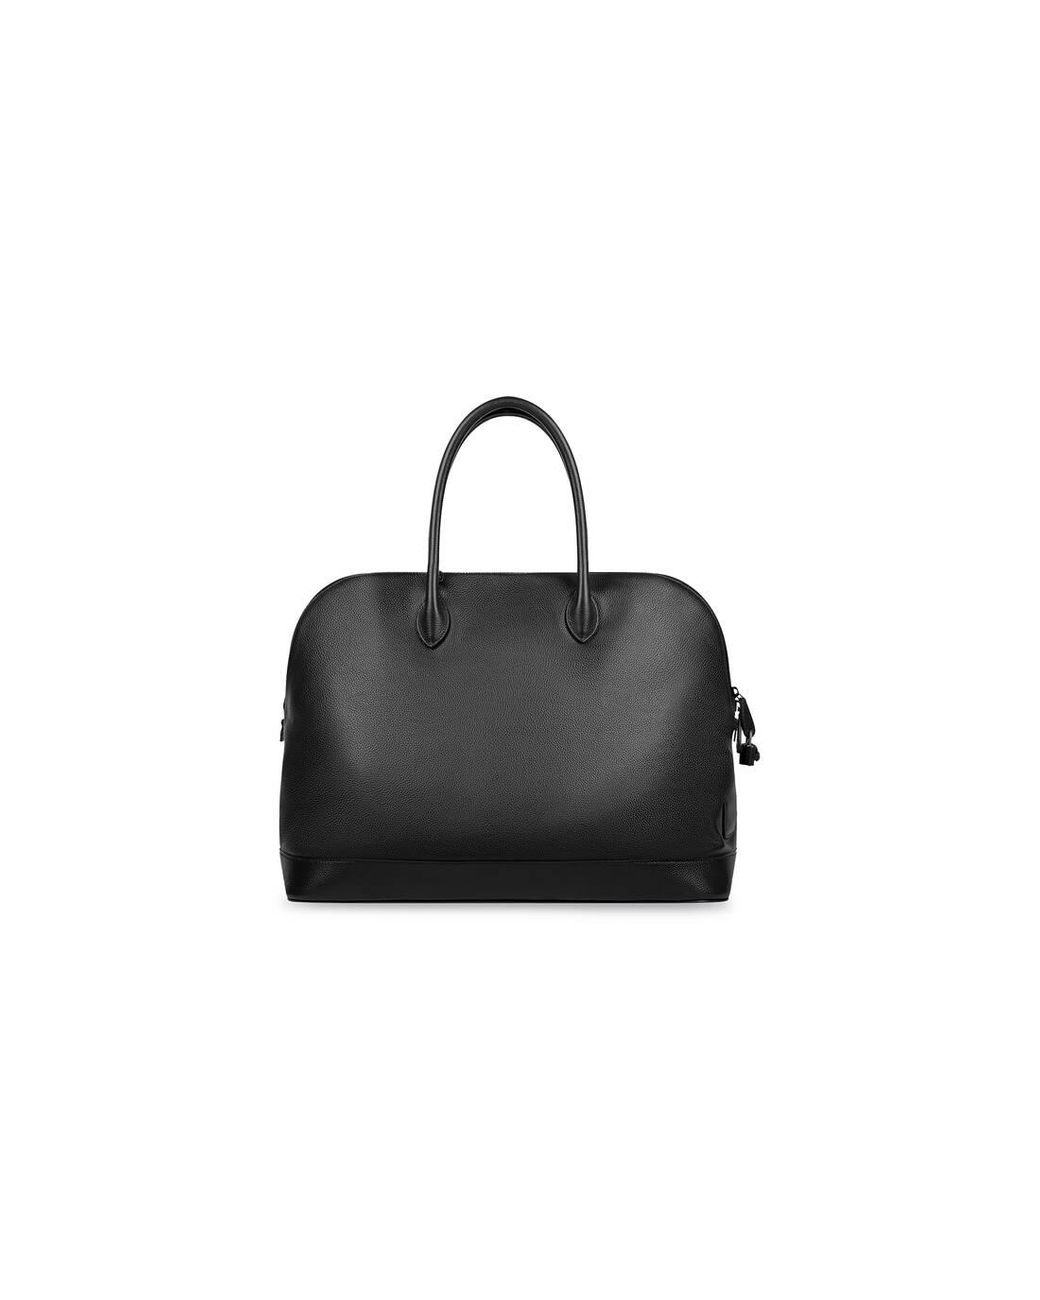 Balenciaga Logo Projector Large Handbag in Black | Lyst